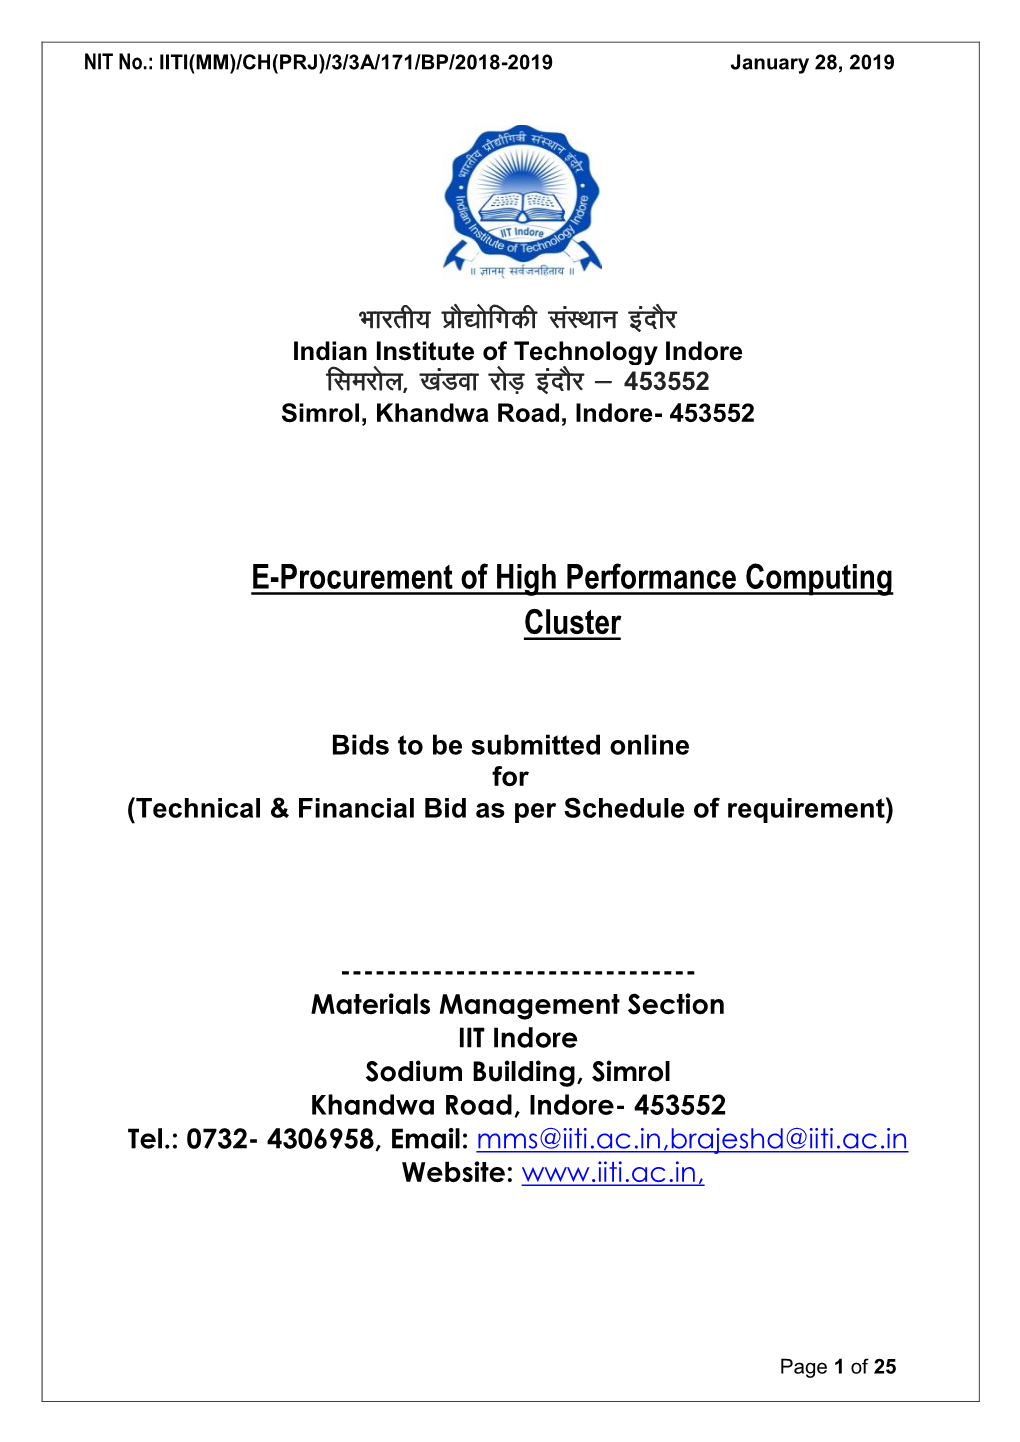 E-Procurement of High Performance Computing Cluster